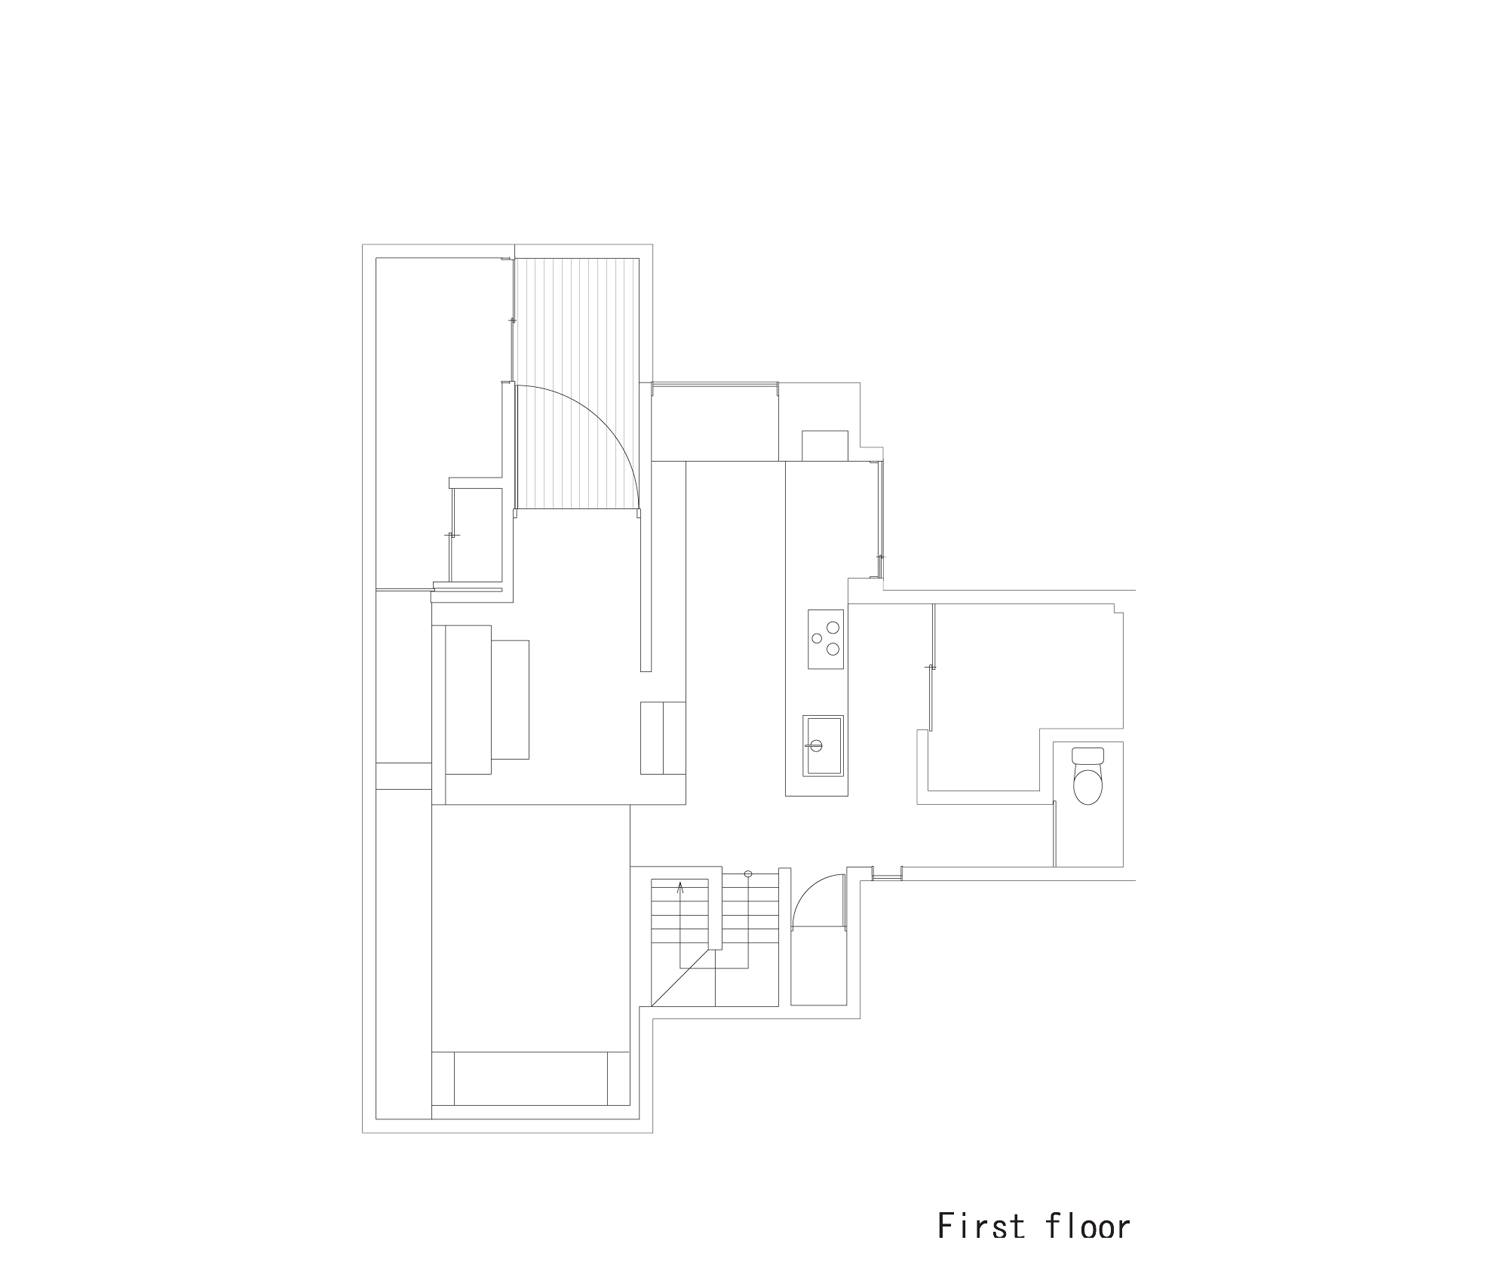 2021245489_first-floor-plan first floor plan